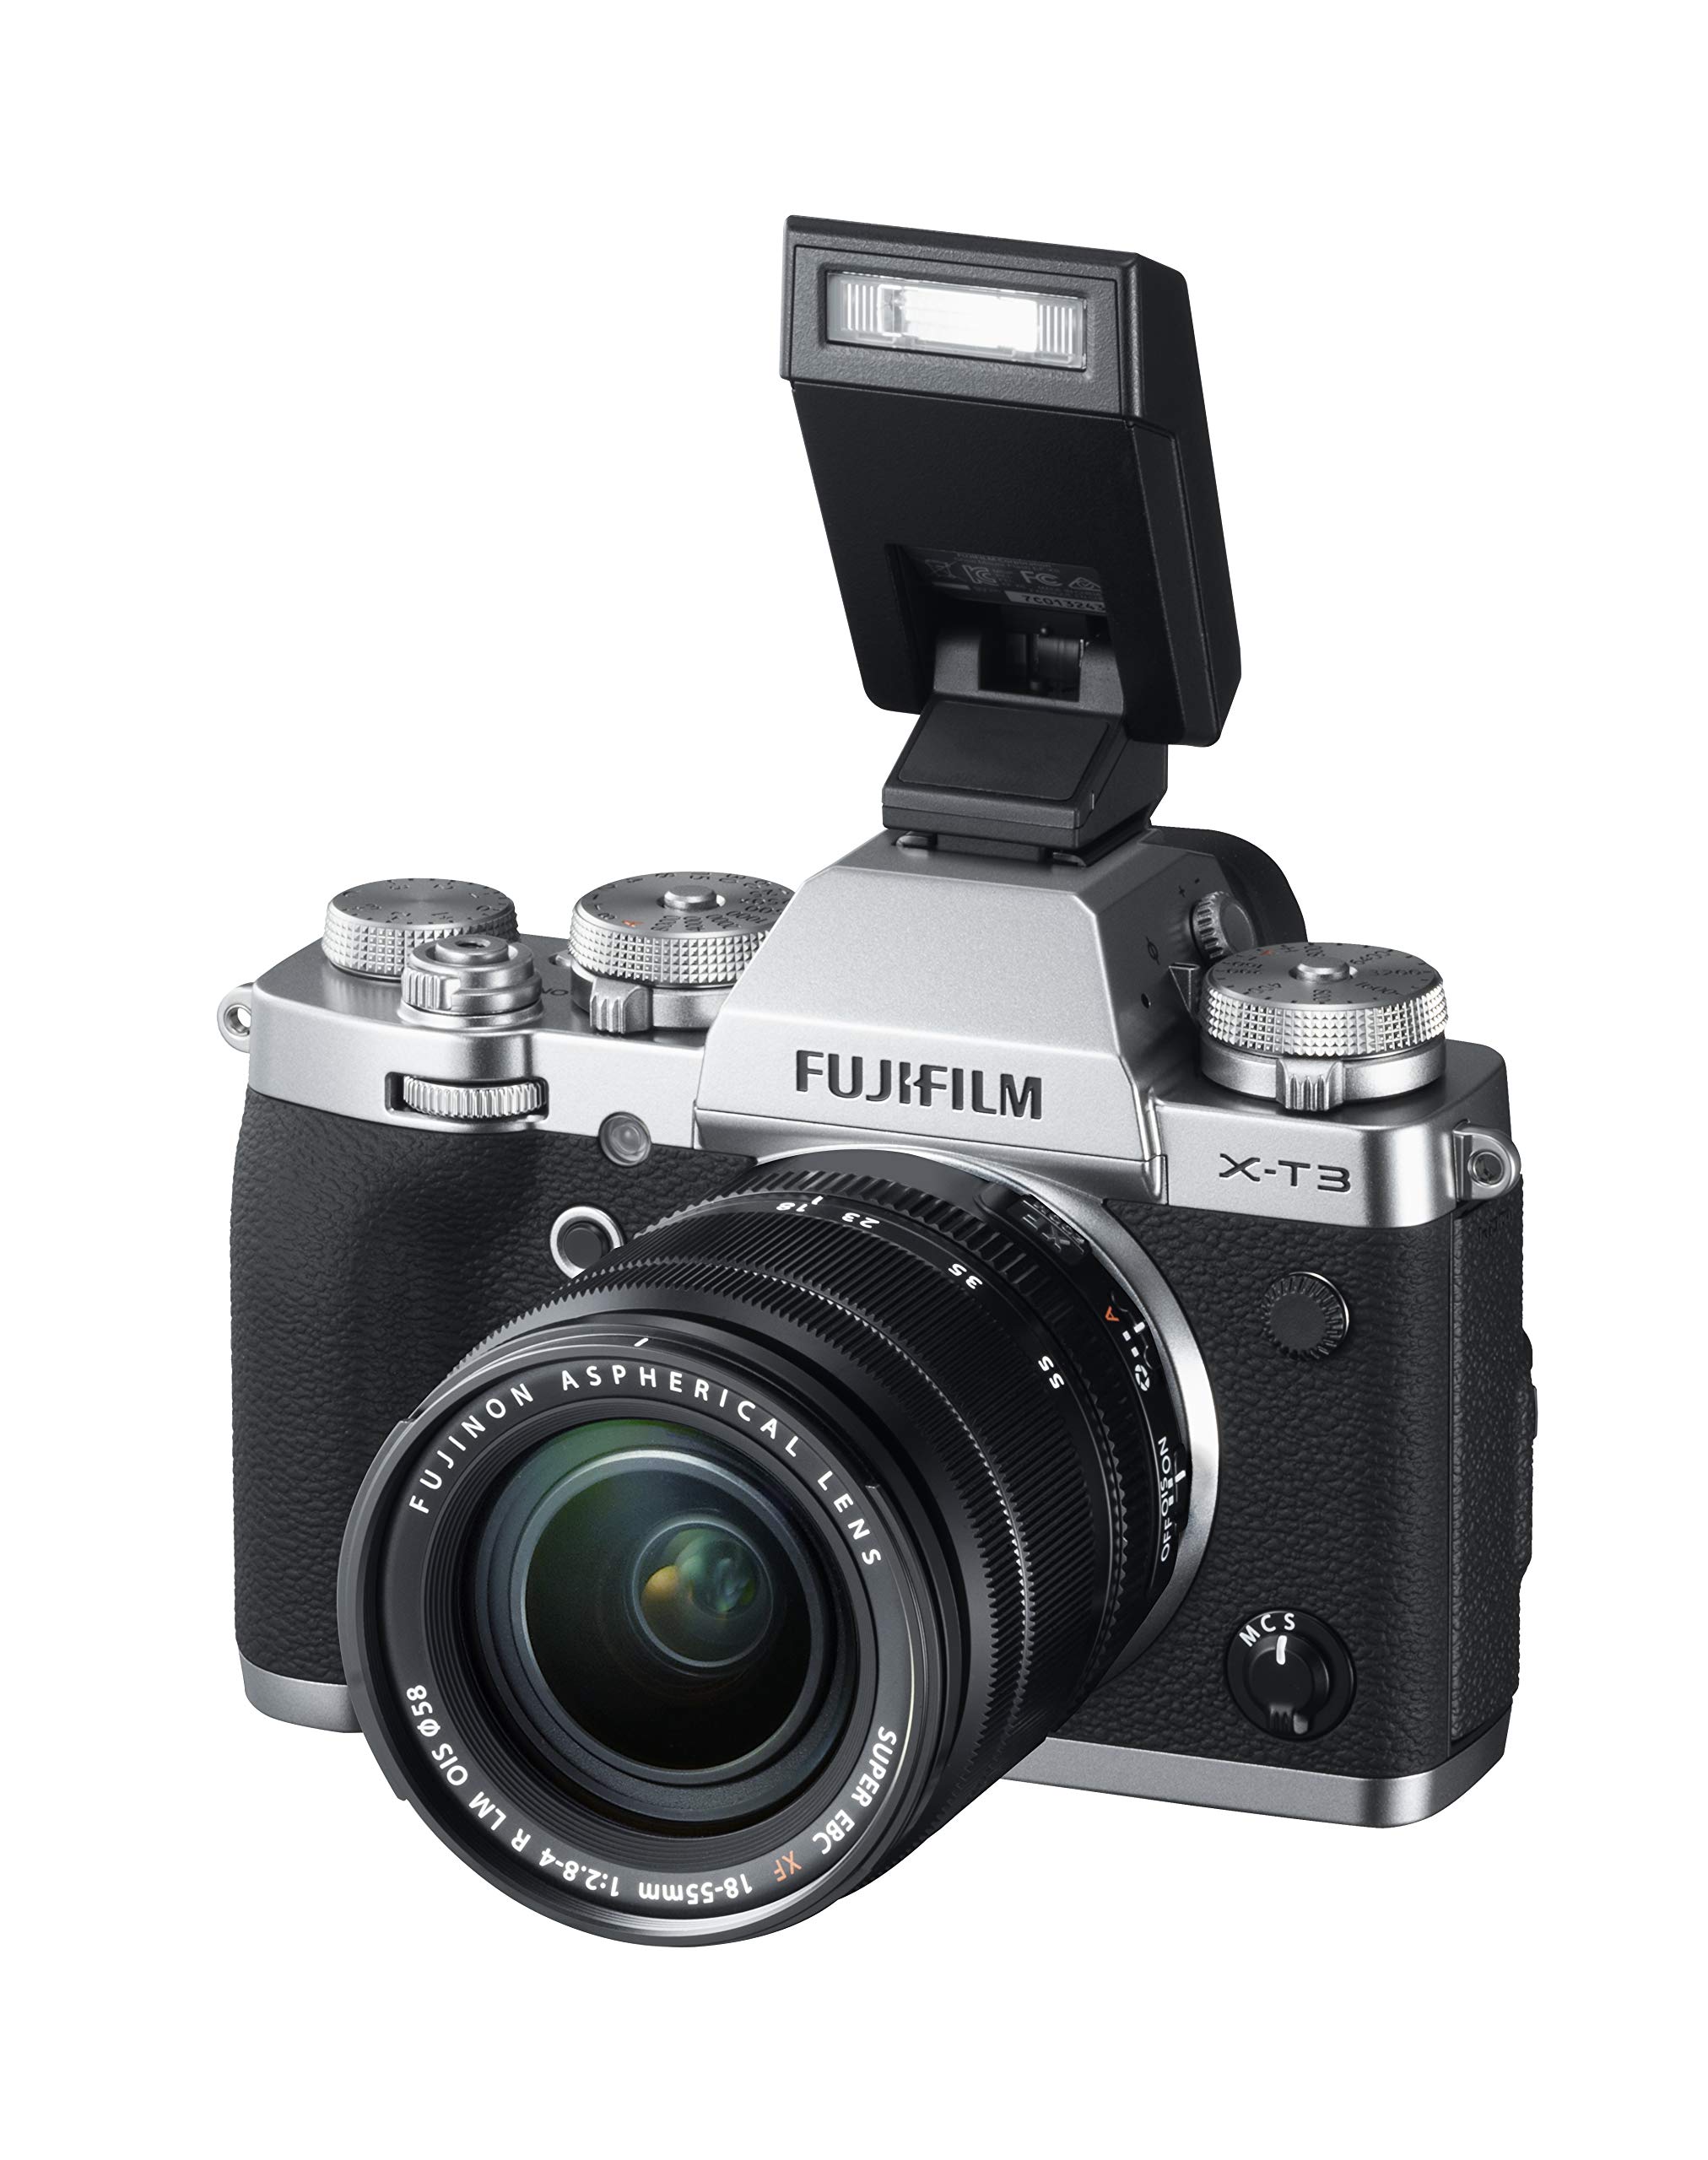 Fujifilm X-T3 Mirrorless Digital Camera, Silver with Fujinon XF18-55mm F2.8-4 R LM Optical Image Stabiliser Lens kit